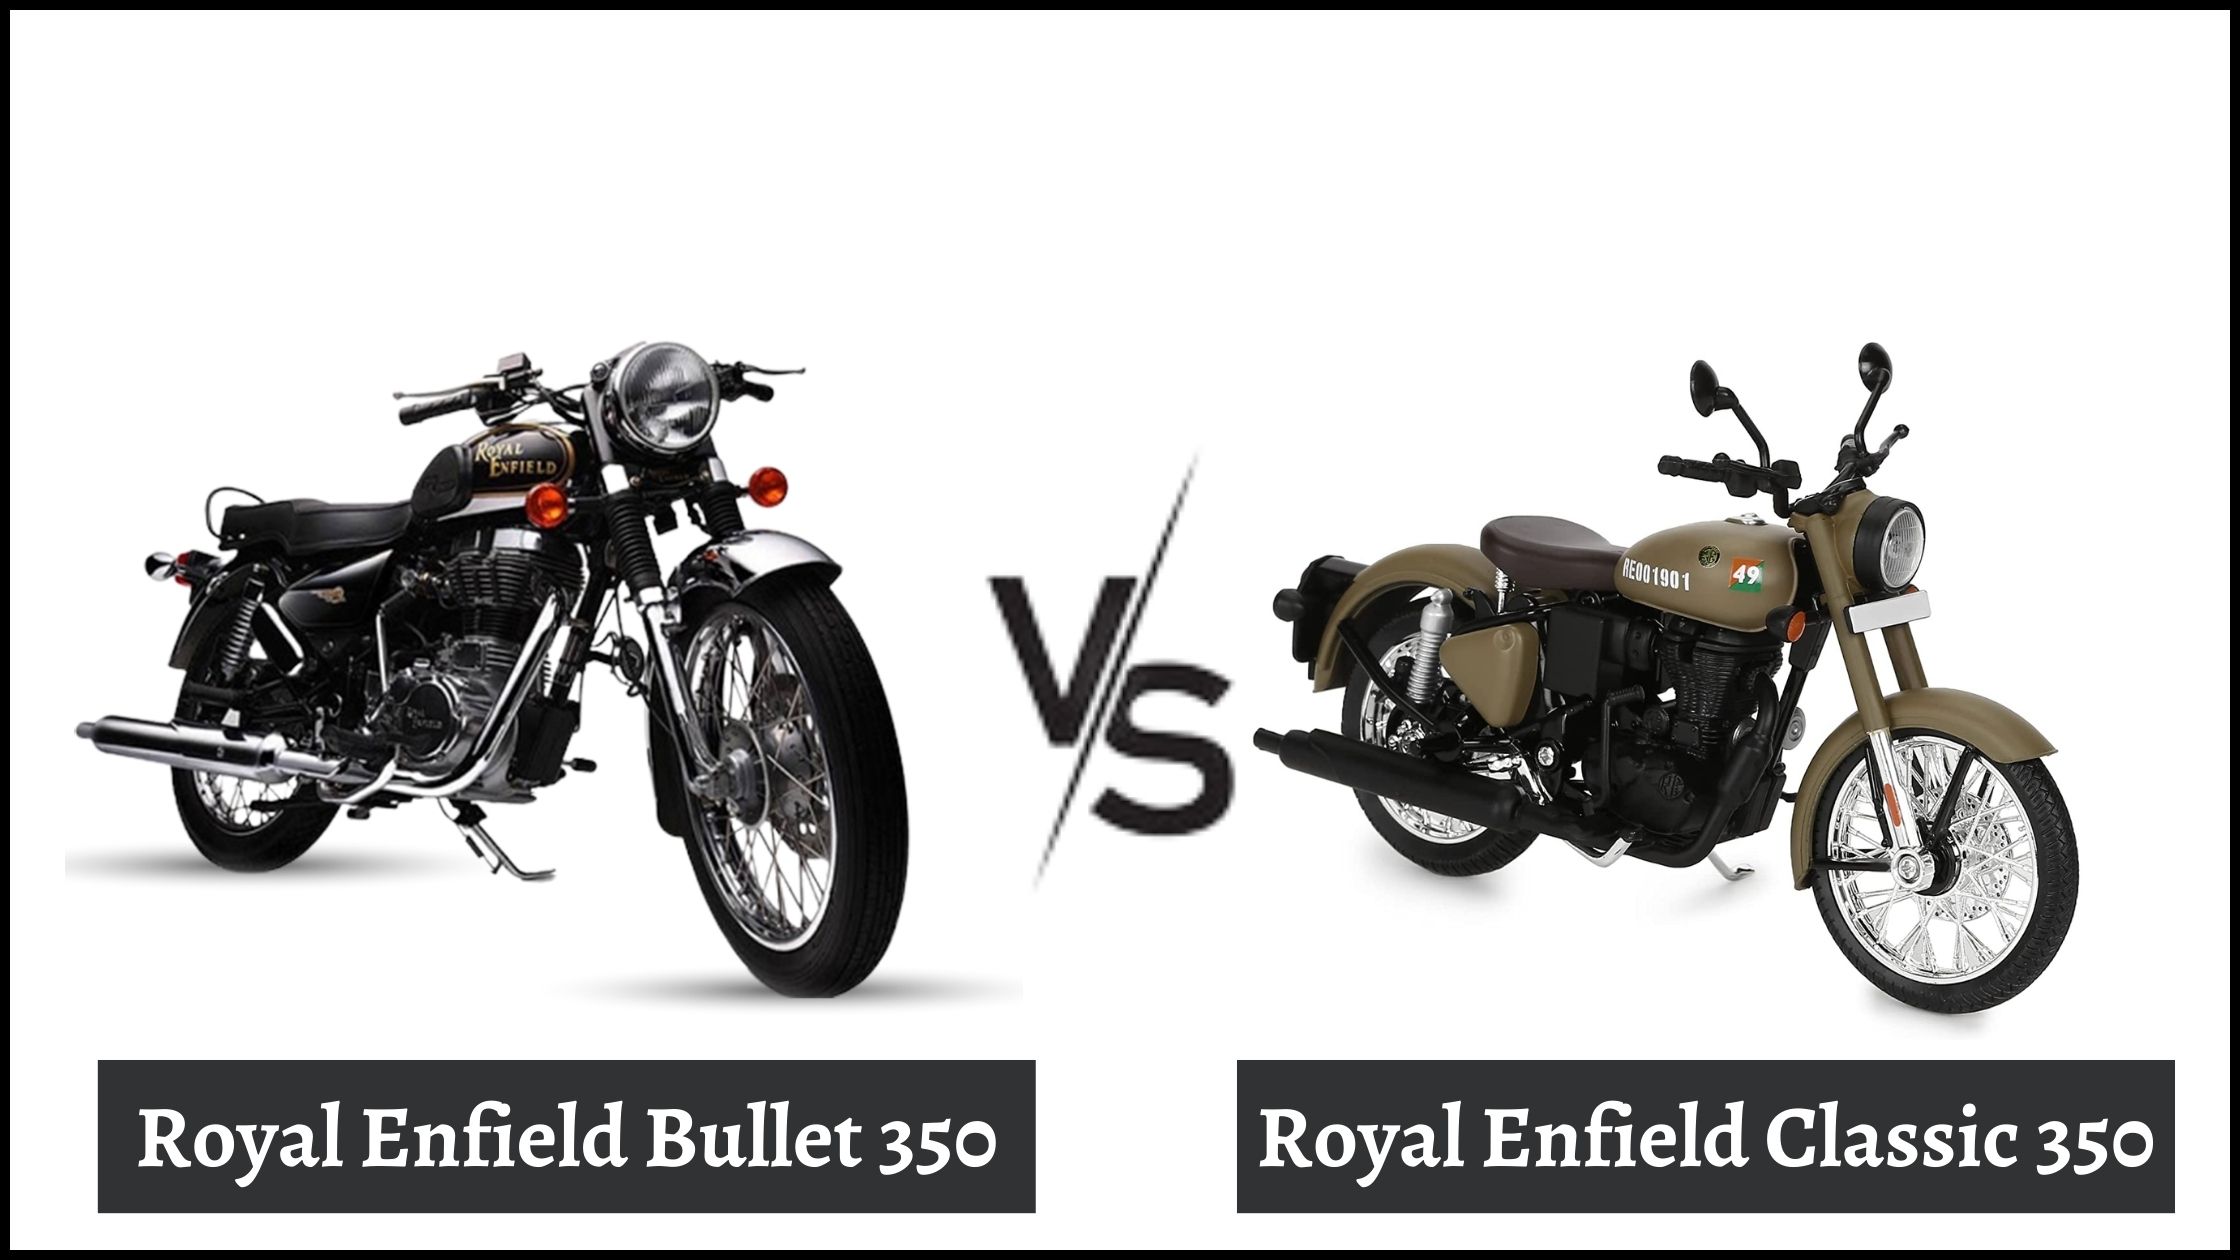 Royal Enfield Bullet 350 vs. Royal Enfield Classic 350